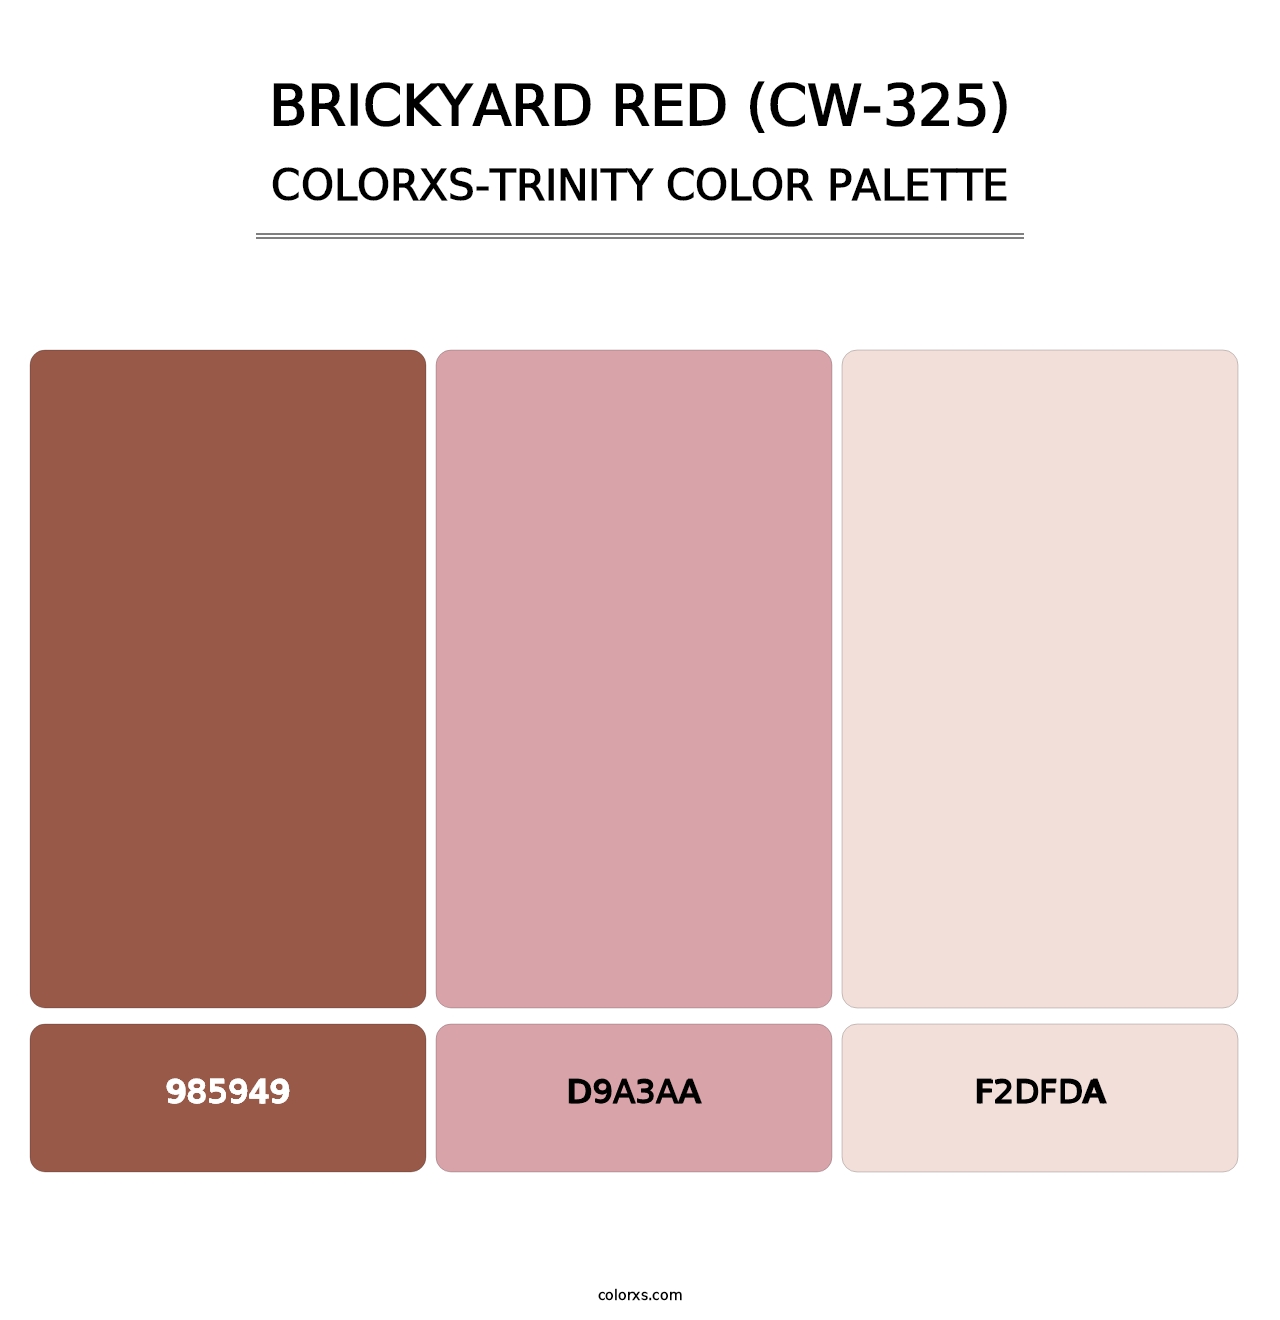 Brickyard Red (CW-325) - Colorxs Trinity Palette